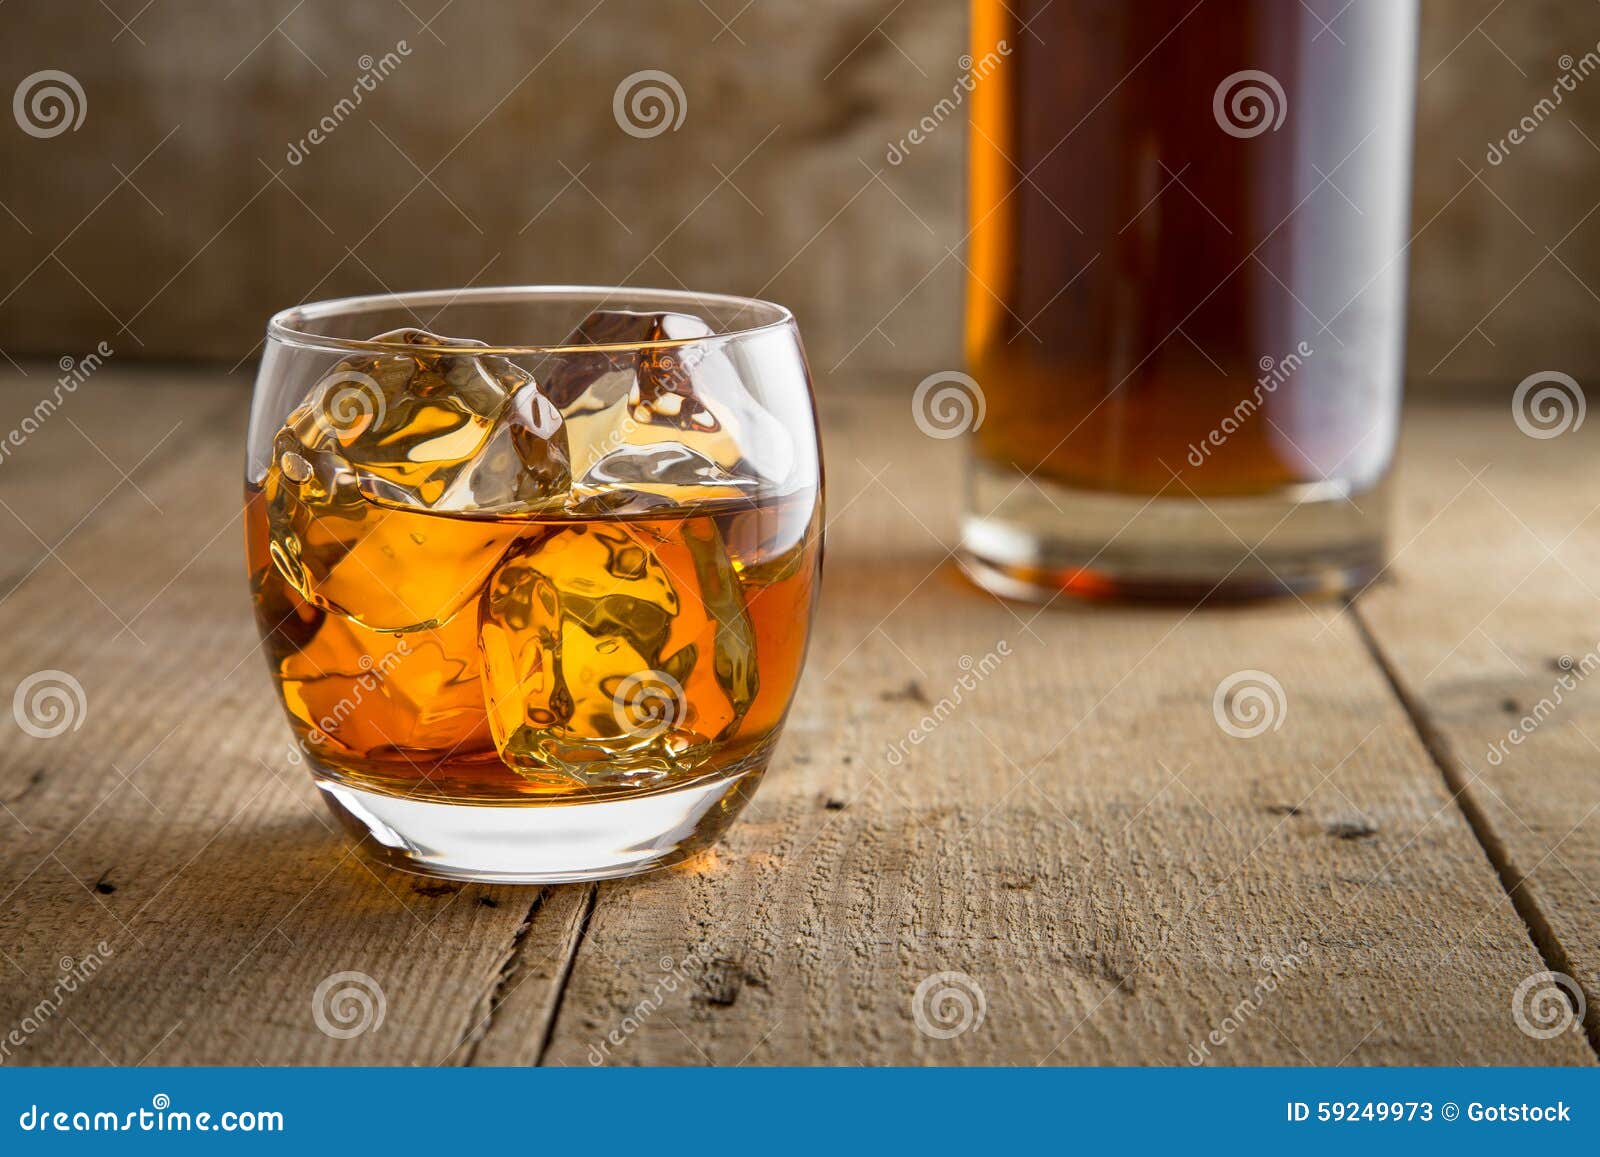 https://thumbs.dreamstime.com/z/whisky-glass-bottle-golden-brown-ice-wooden-surface-saloon-bar-pub-scotch-whiskey-reclaimed-wood-brandy-rocks-59249973.jpg